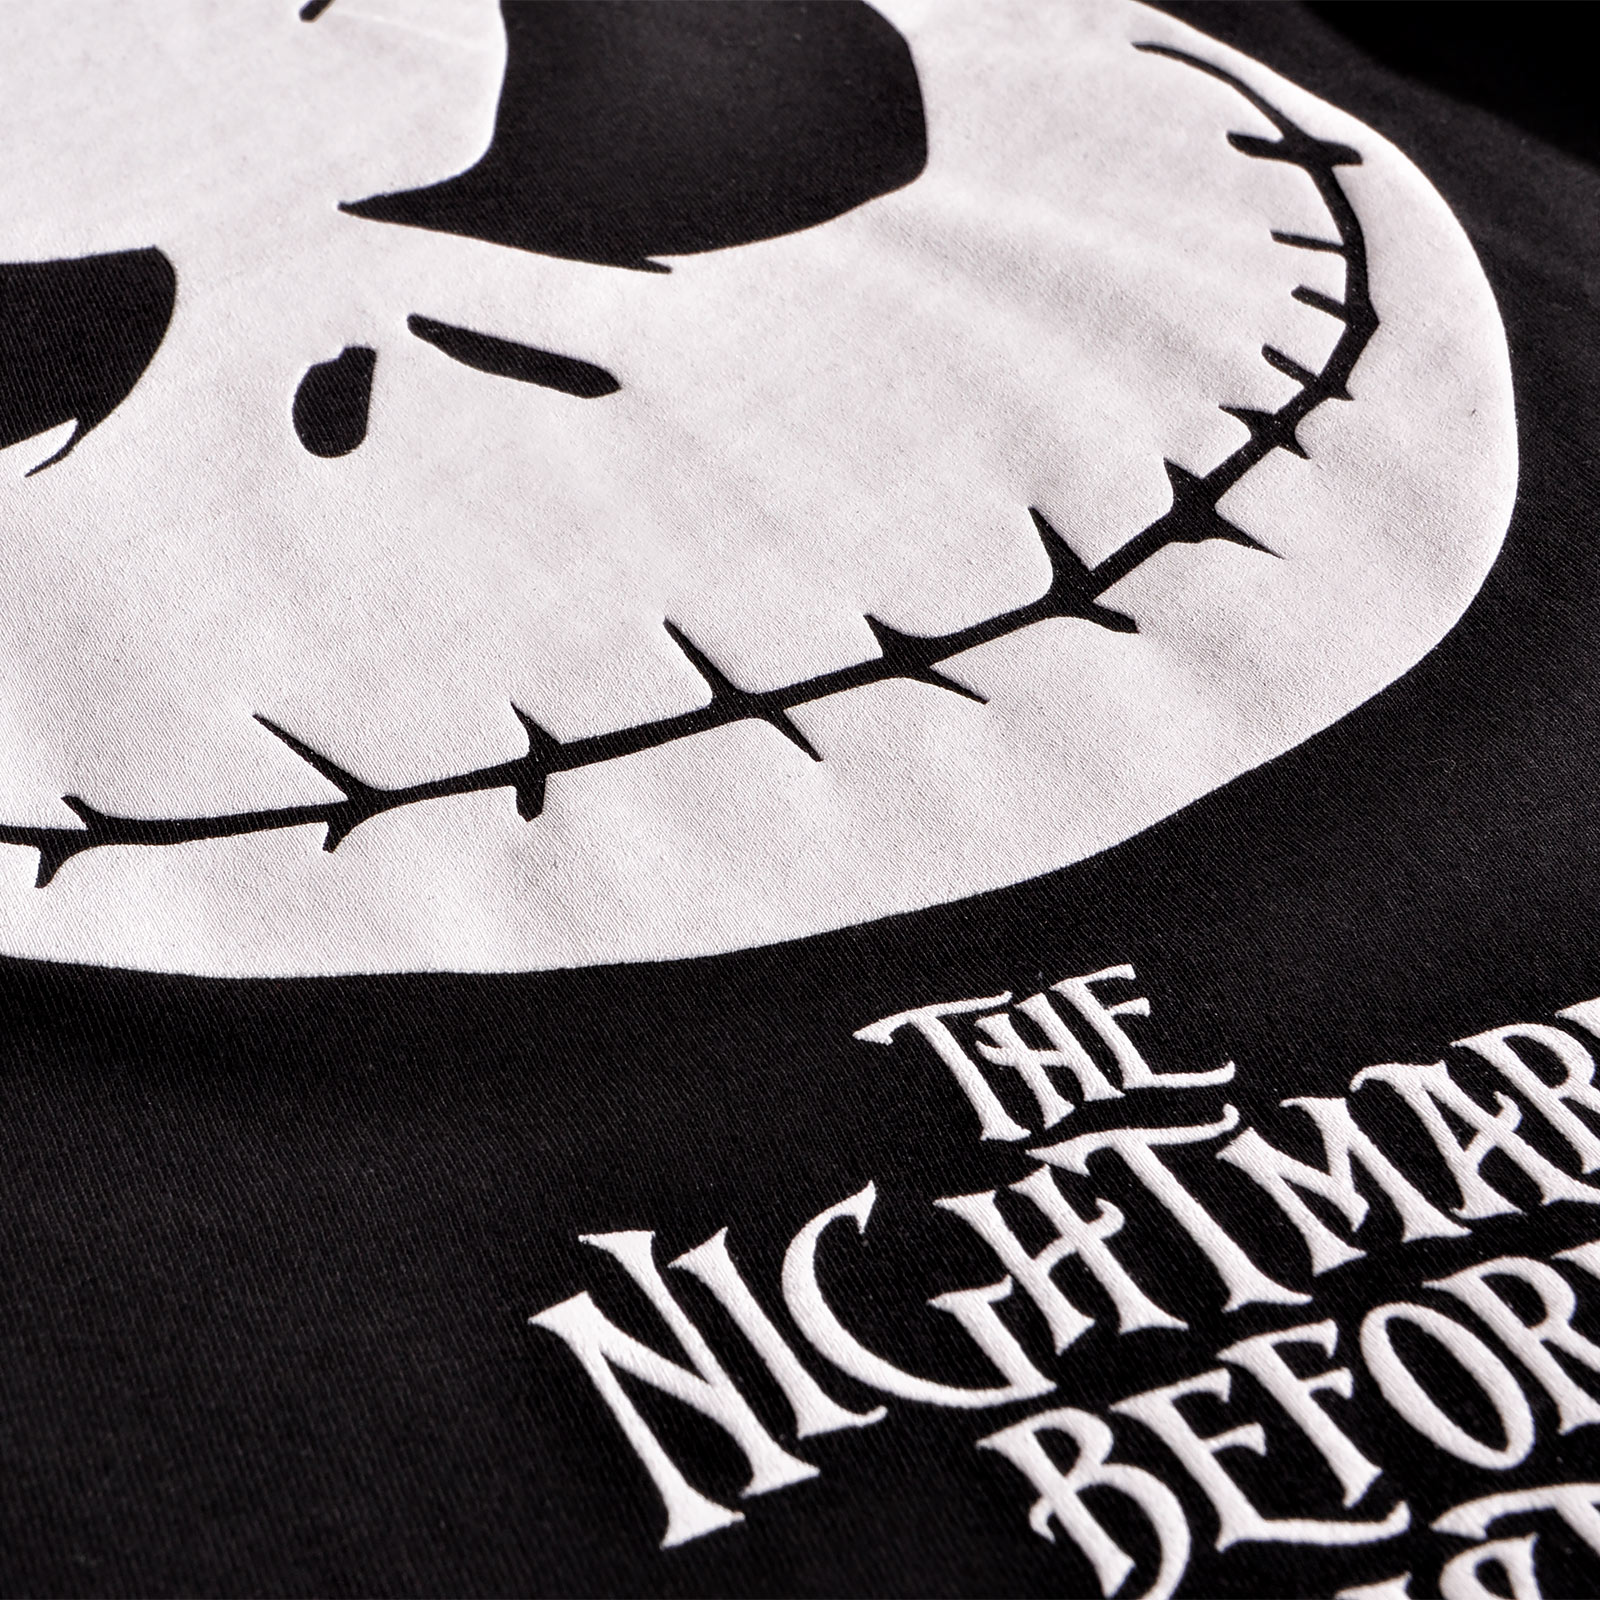 Nightmare Before Christmas - Jack Smile Dames T-shirt Zwart